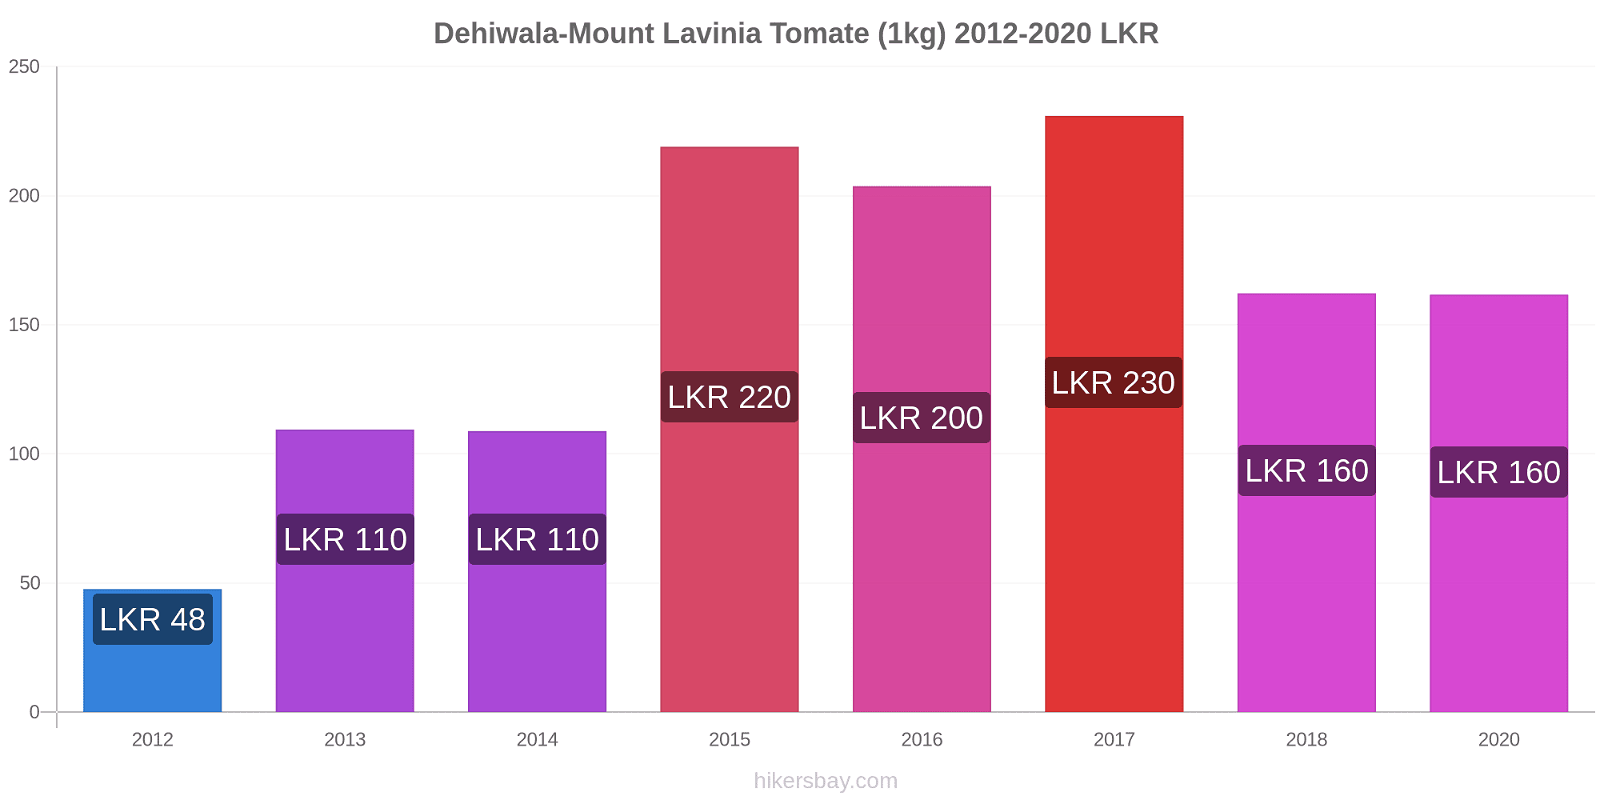 Dehiwala-Mount Lavinia changements de prix Tomate (1kg) hikersbay.com